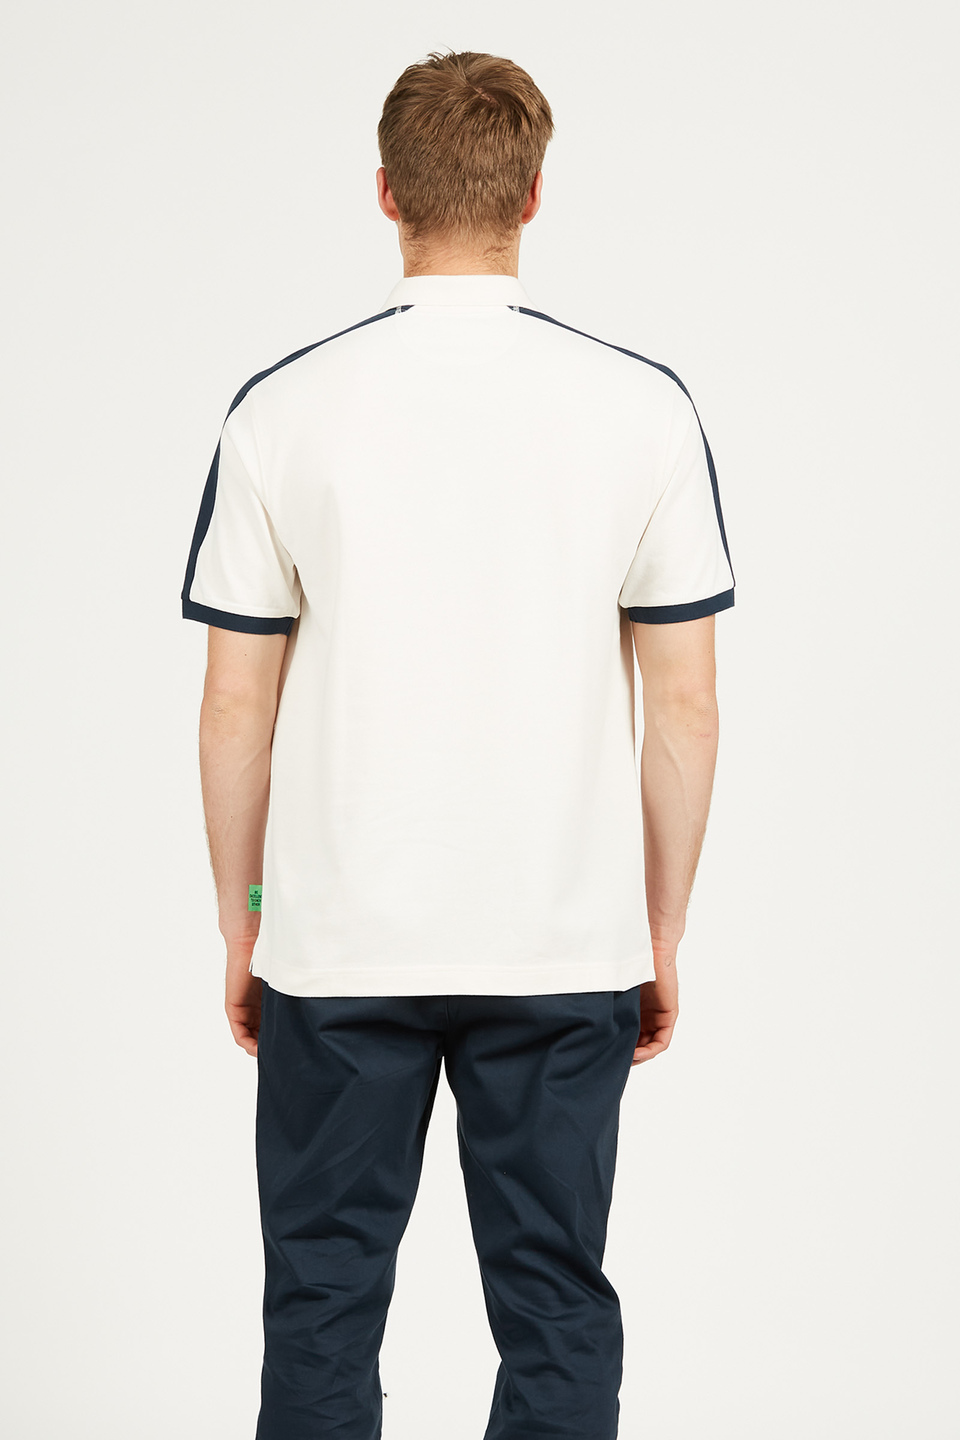 Men's short-sleeved 100% cotton polo shirt | La Martina - Official Online Shop